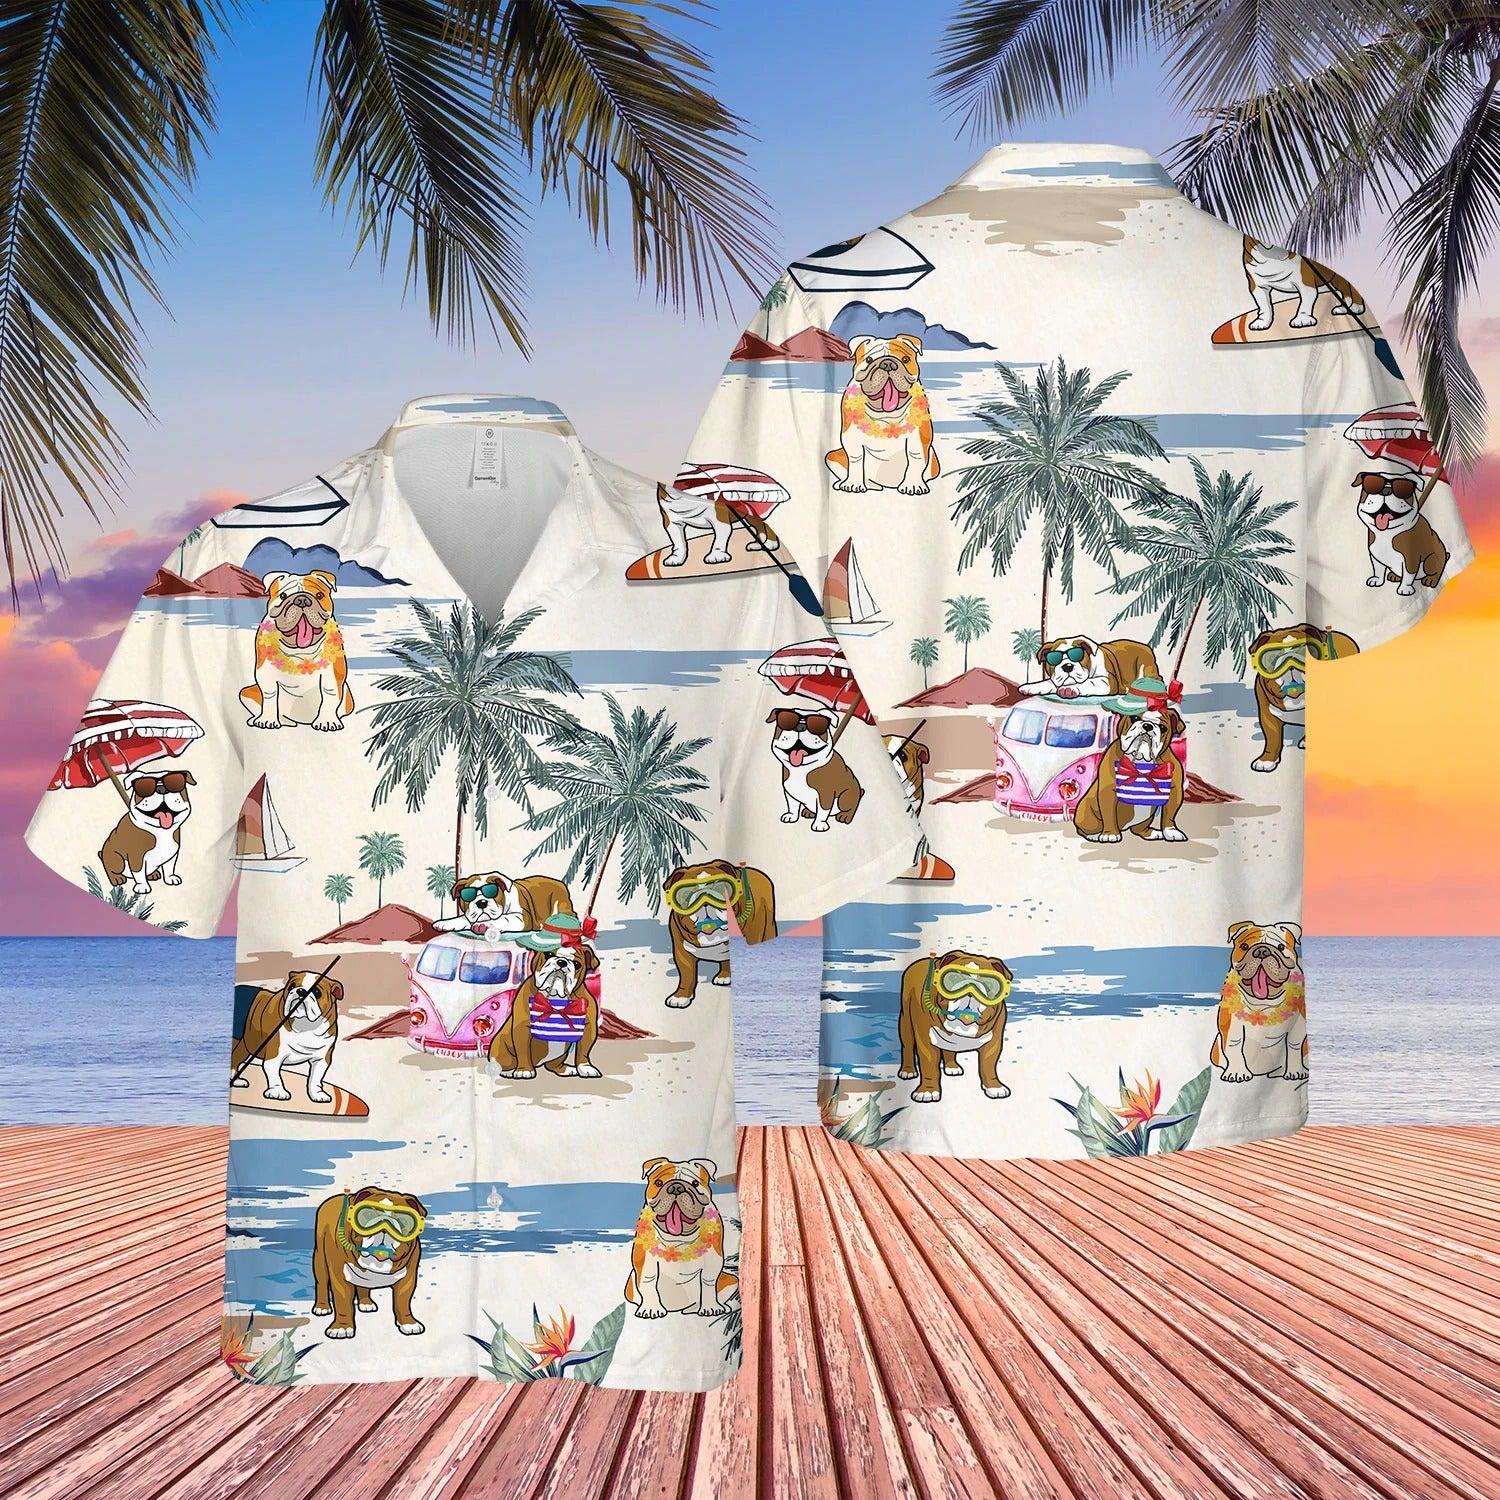 Bulldog/ Boston Terrier Summer Beach Hawaiian Shirt/ Dog Breed 3D Print On Hawaiian Aloha Shirt For Men And Woman